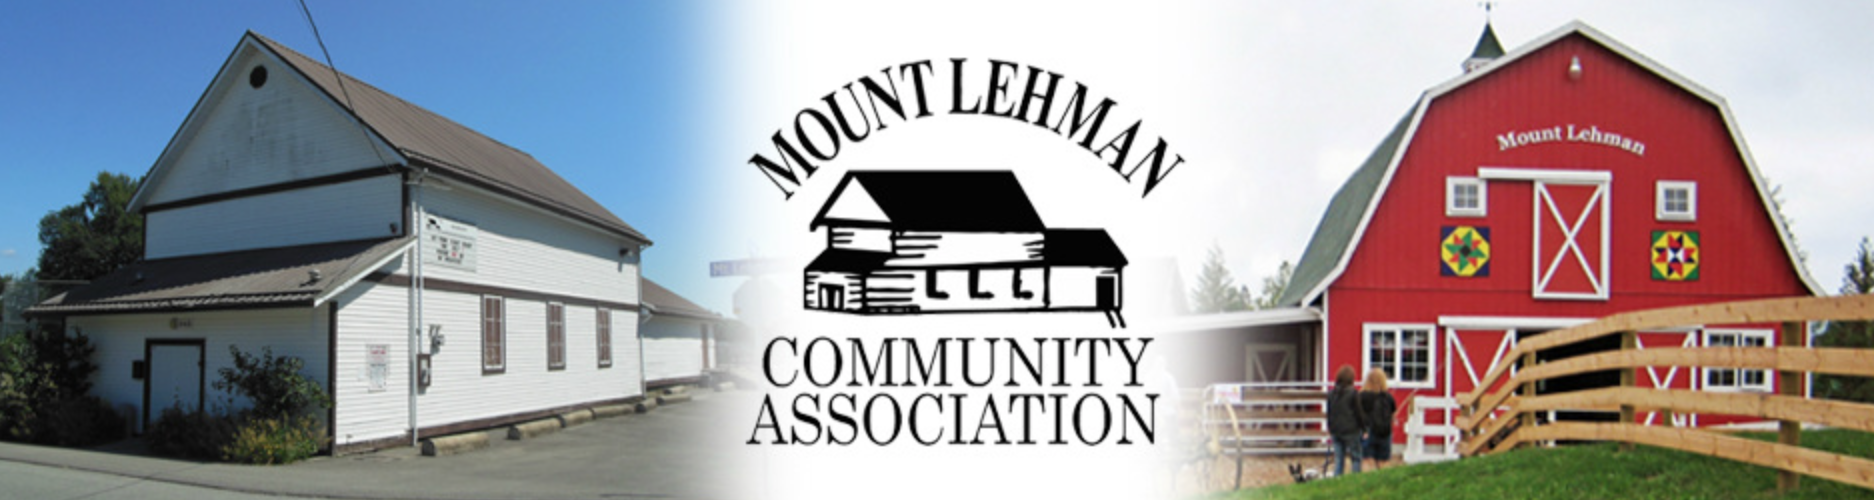 Mt Lehman Community Association 